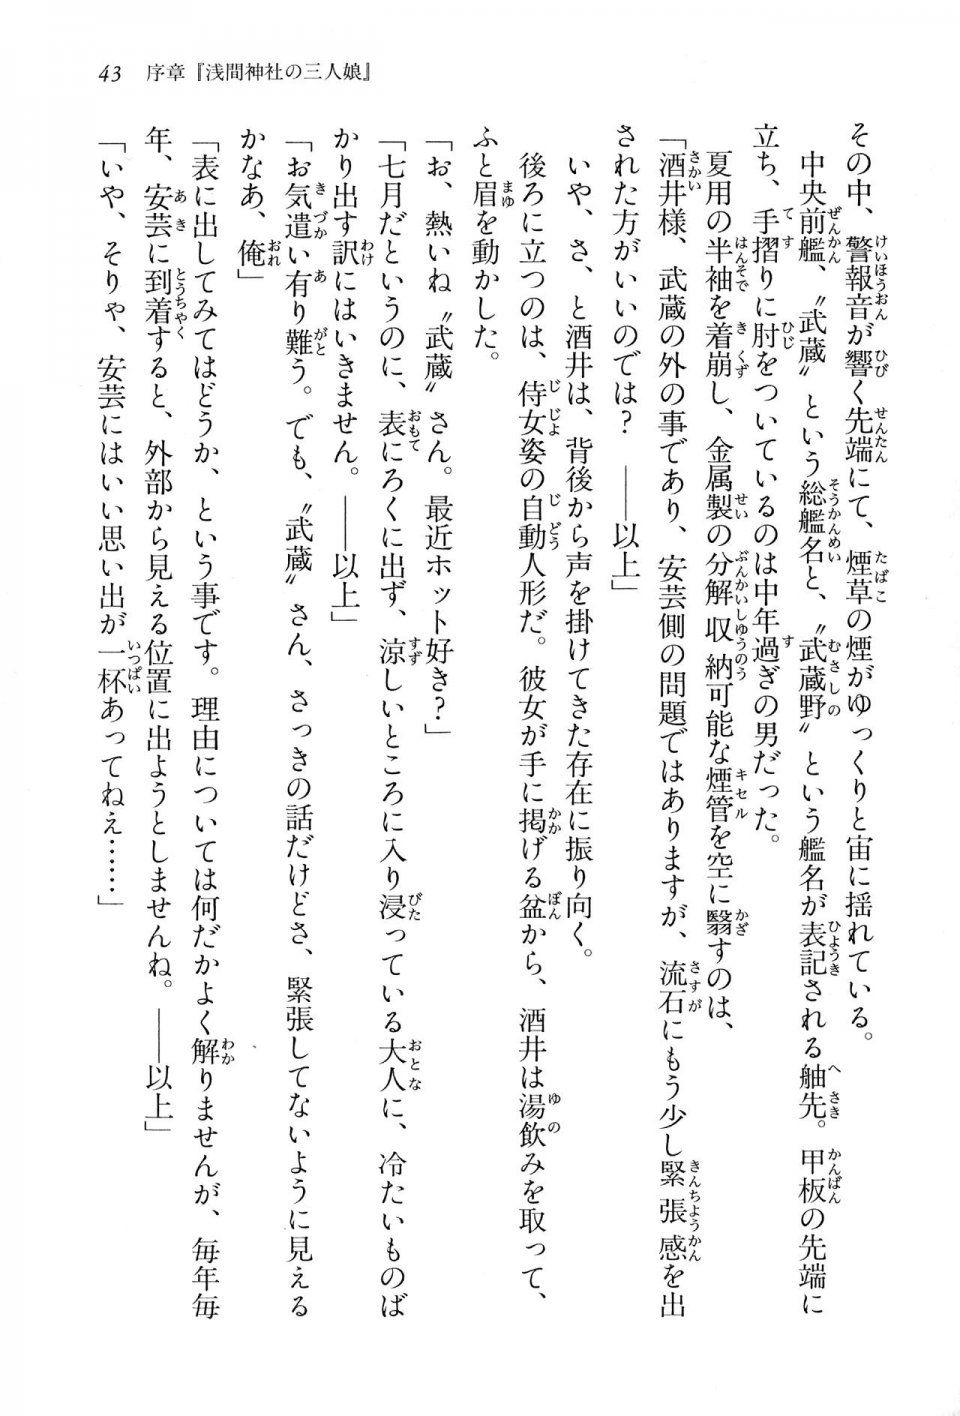 Kyoukai Senjou no Horizon BD Special Mininovel Vol 1(1A) - Photo #47